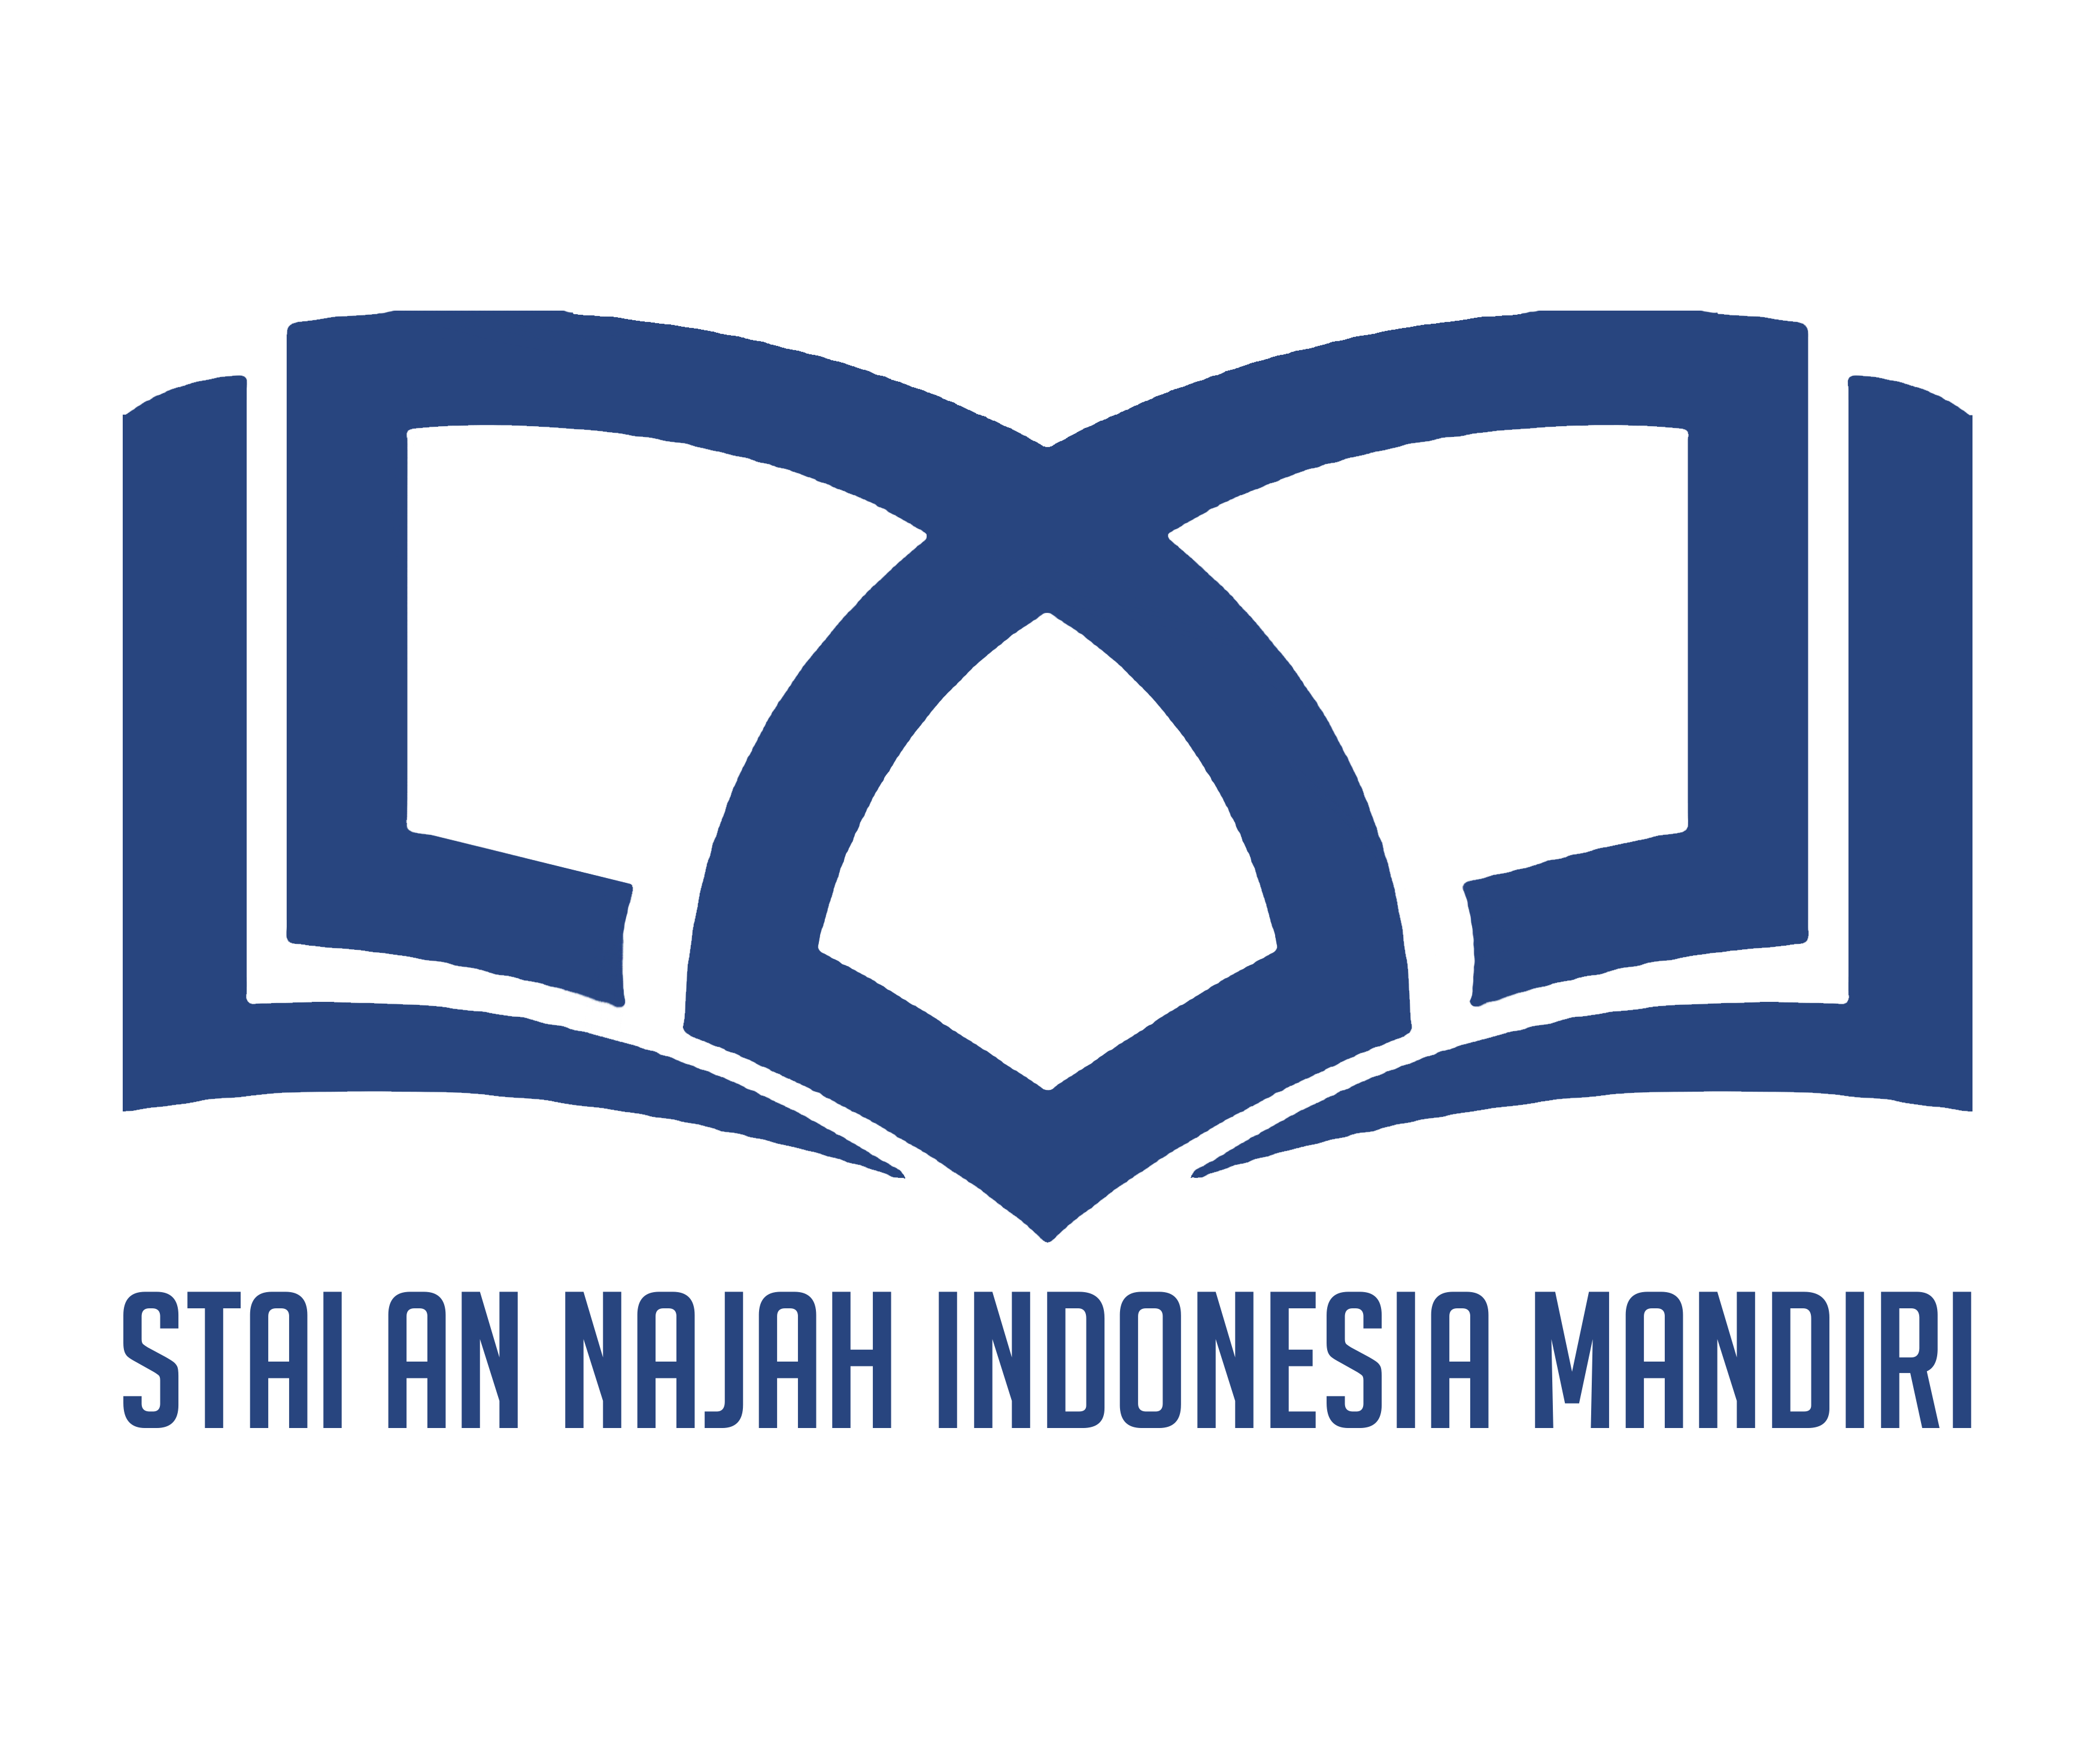 STAI An-Najah Indonesia Mandiri